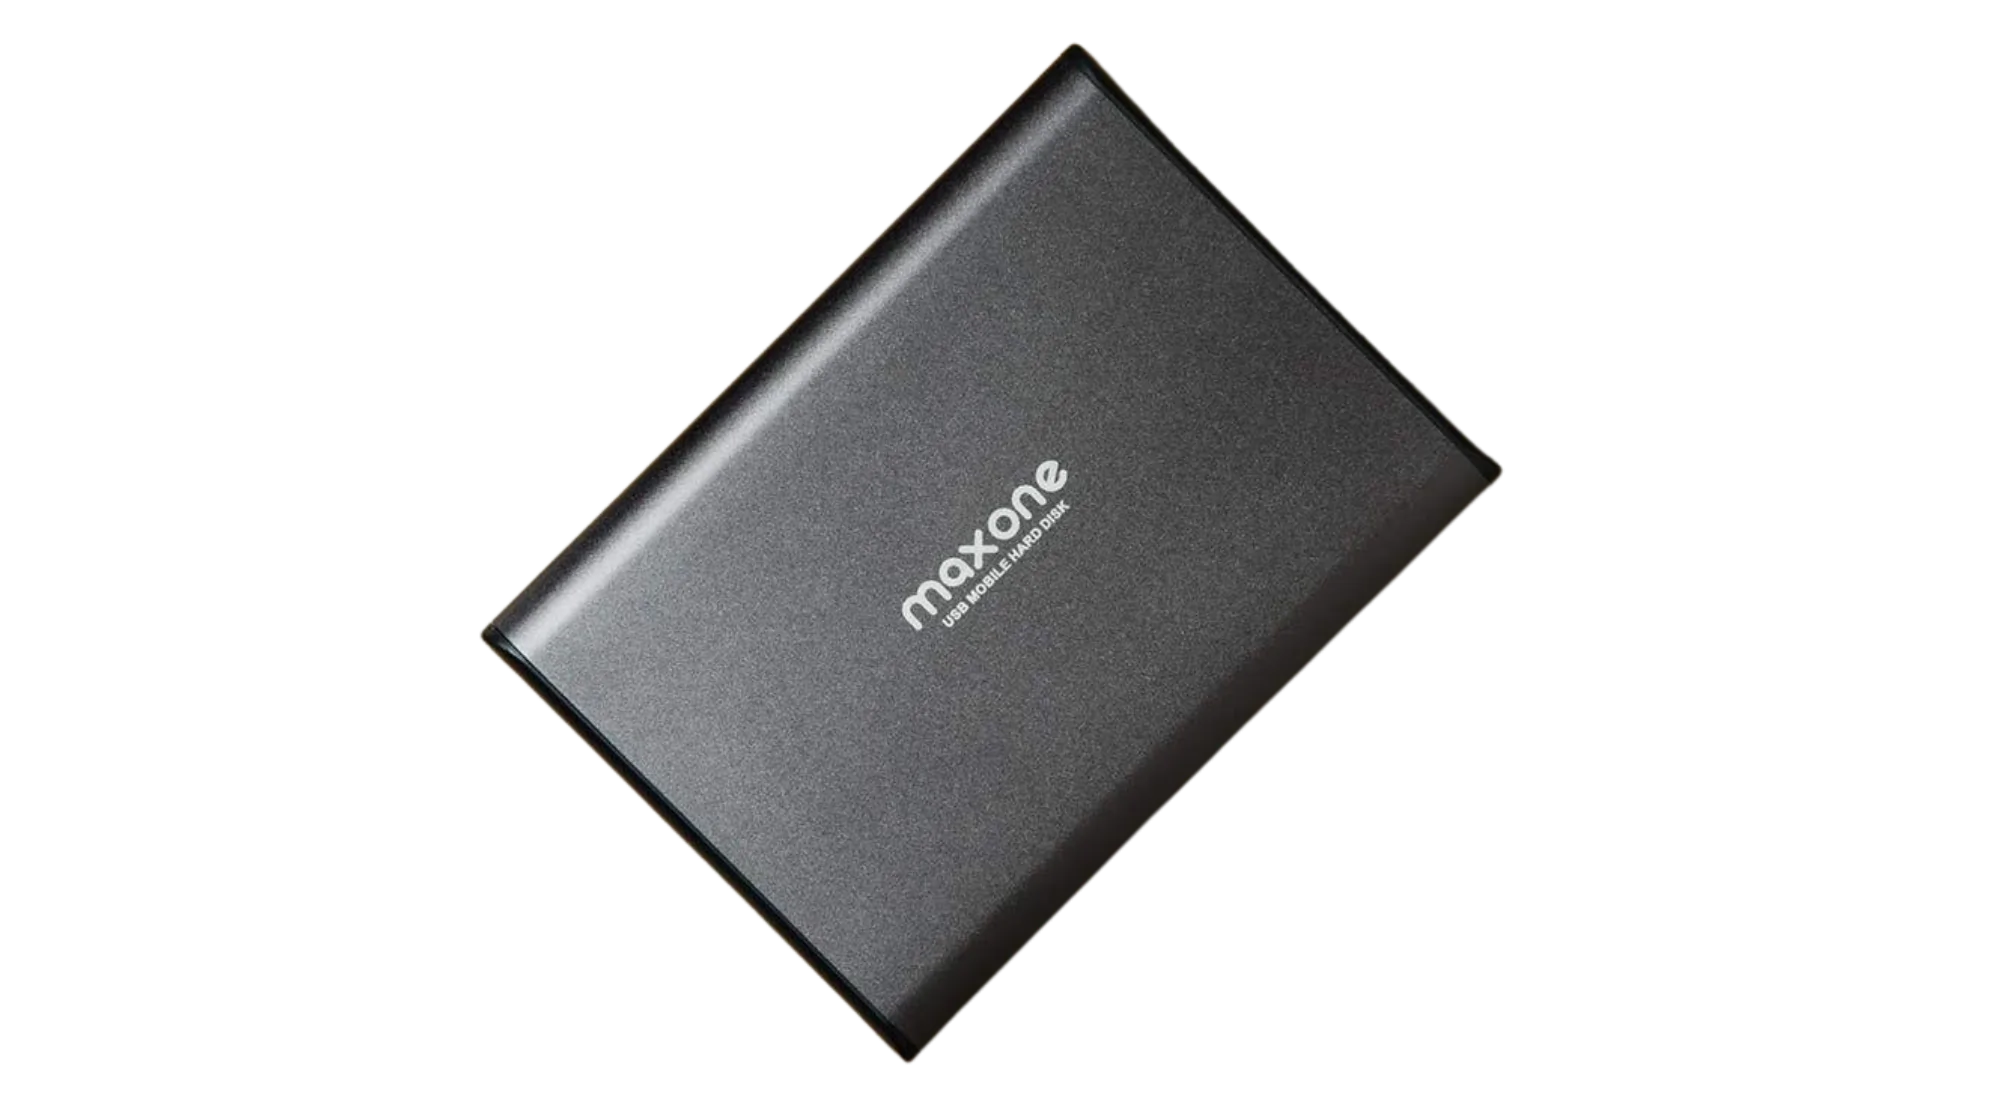 Maxone 1TB Slim Portable External Hard Drive